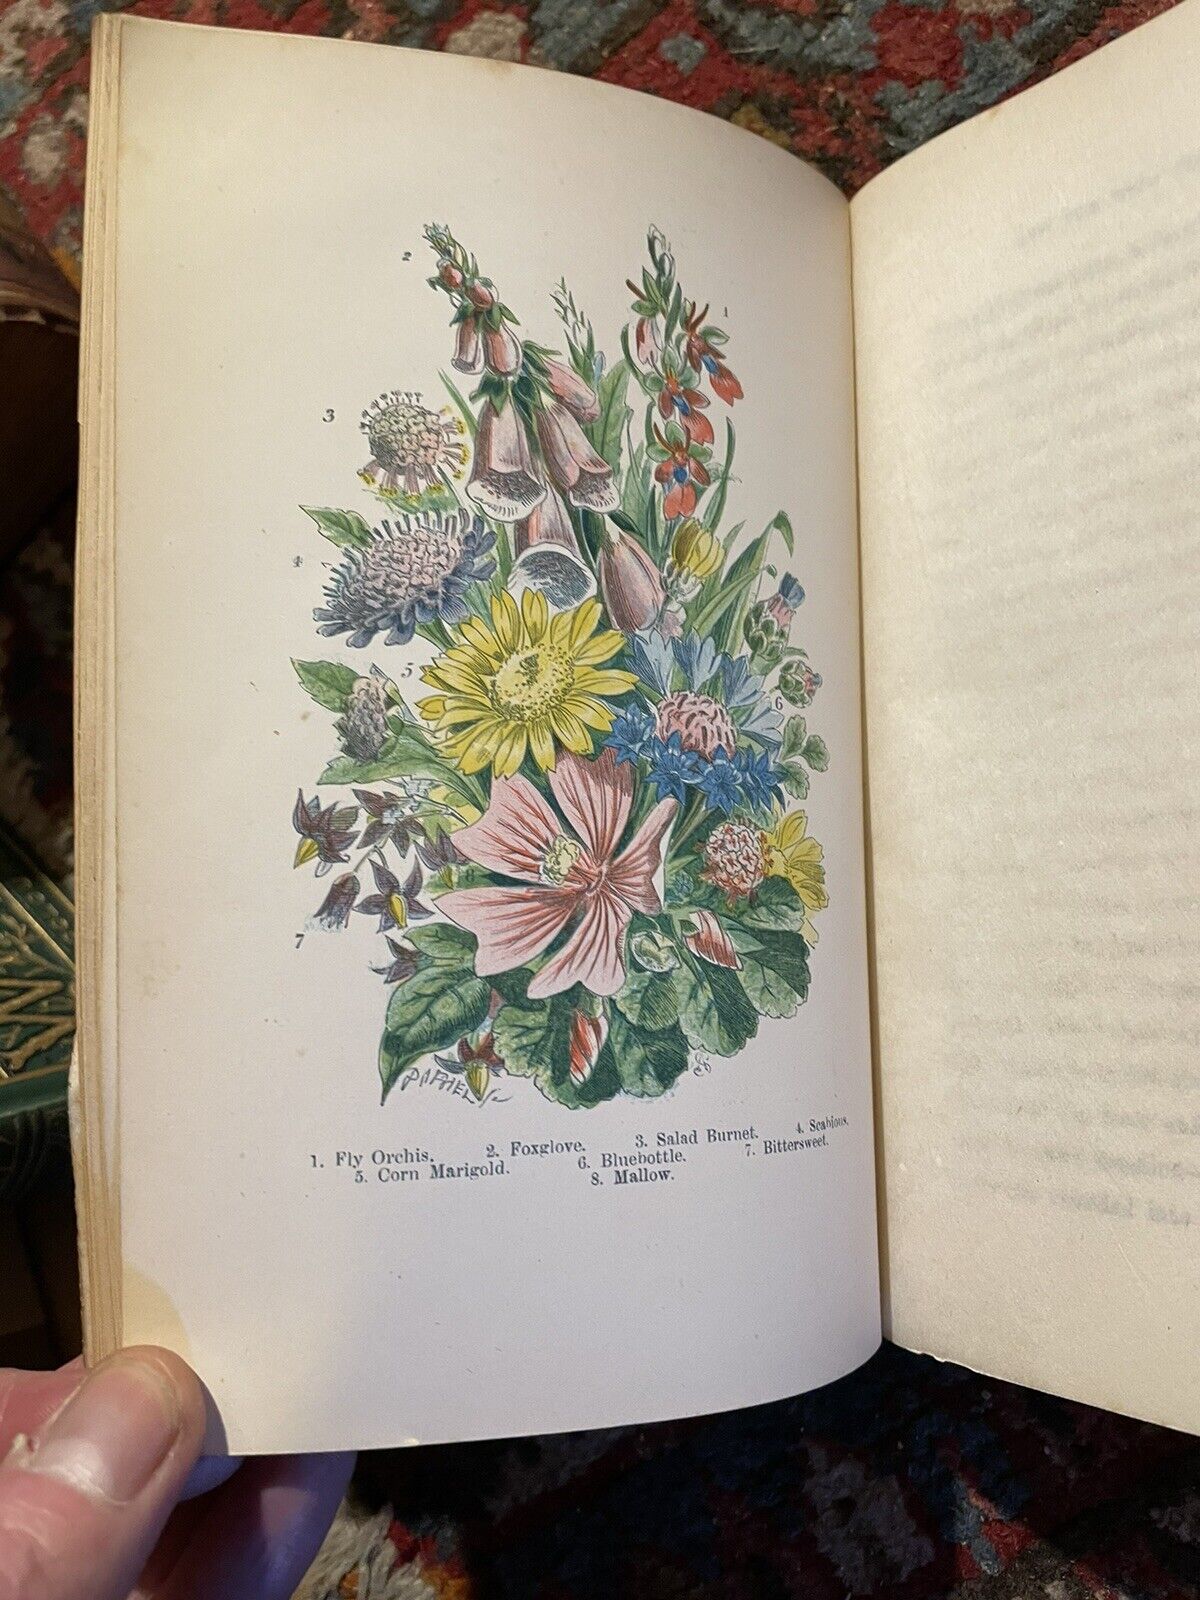 c1868 English Wild Flowers : 8 Hand-Coloured Plates : Decorative Cloth : Burgess